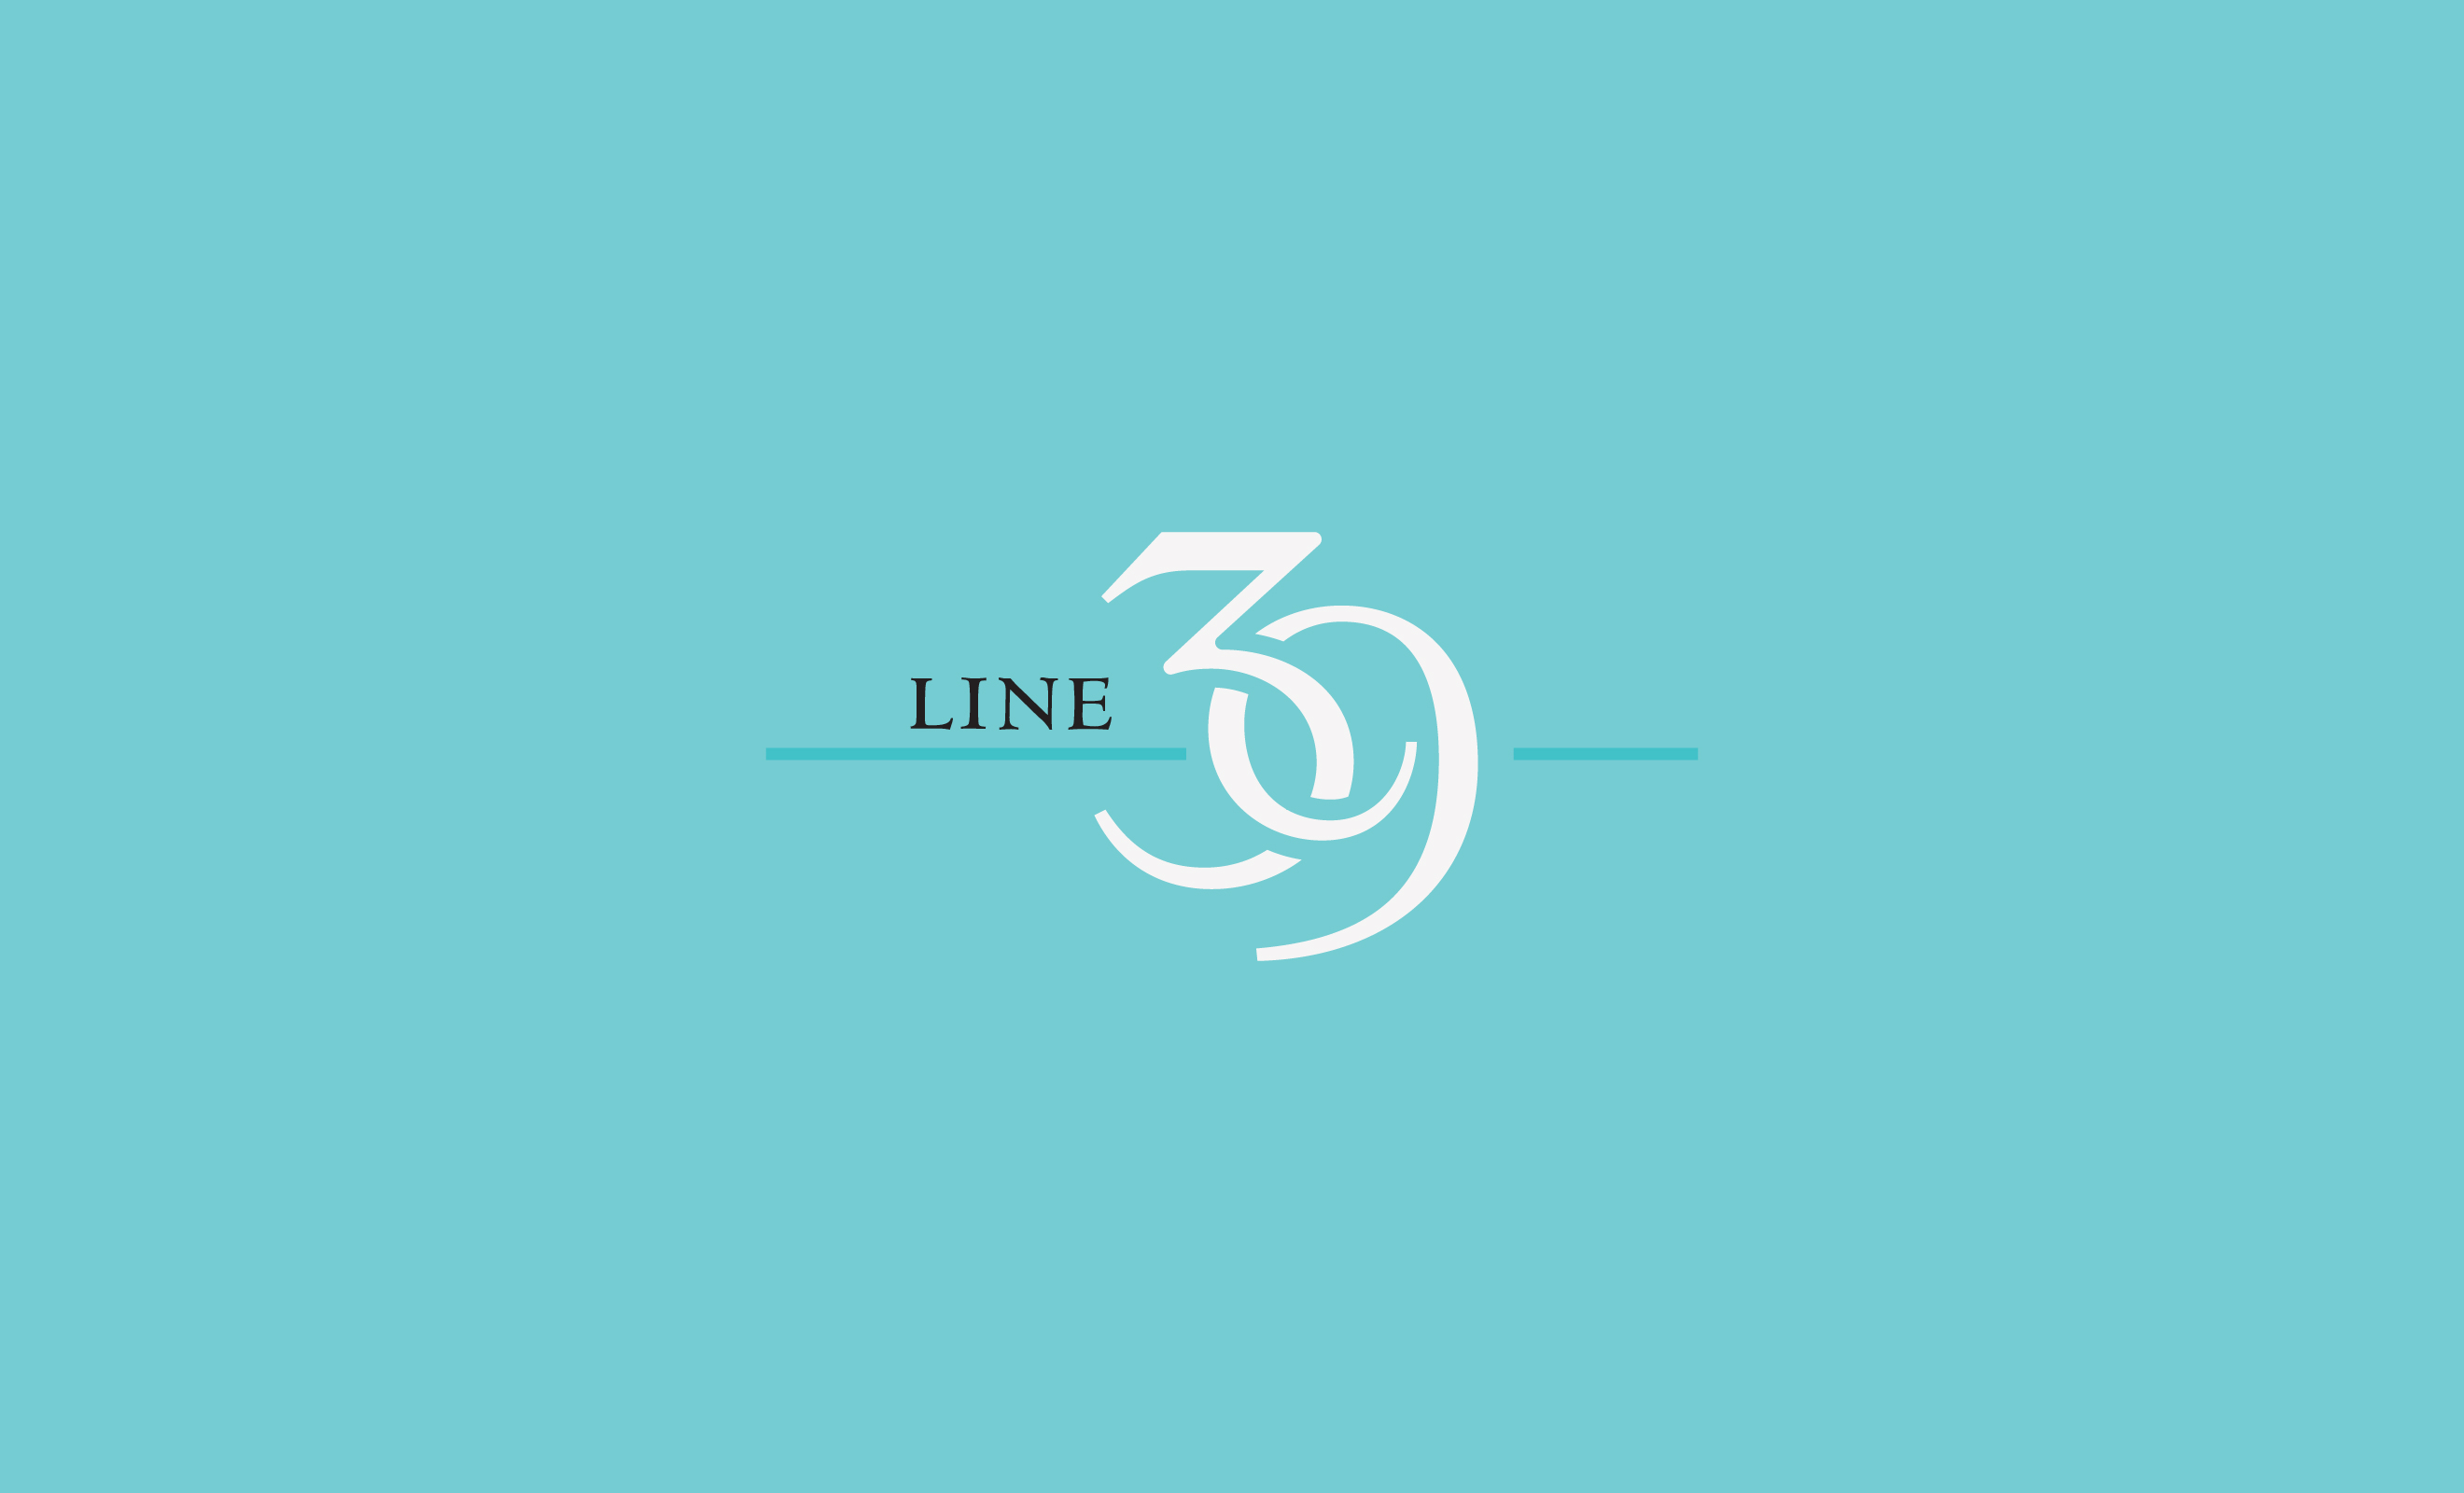 Line 39 Wine Logo Design